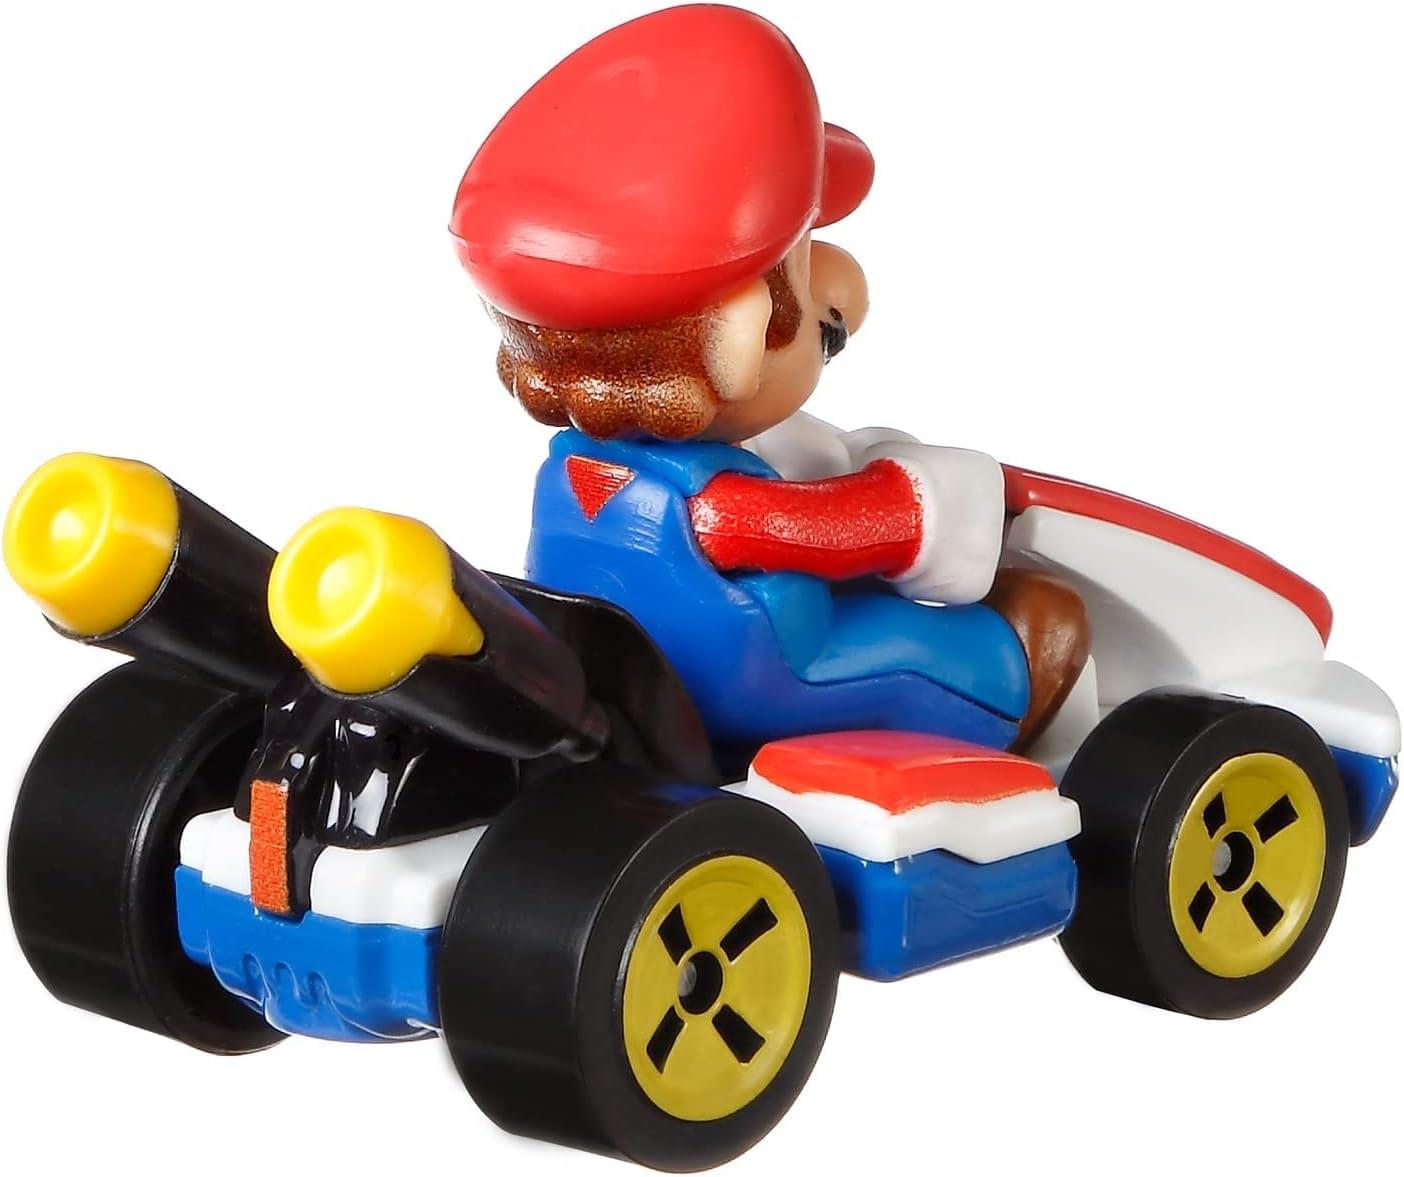 Mario Kart Hot Wheels 1:64 Diecast Car | Mario